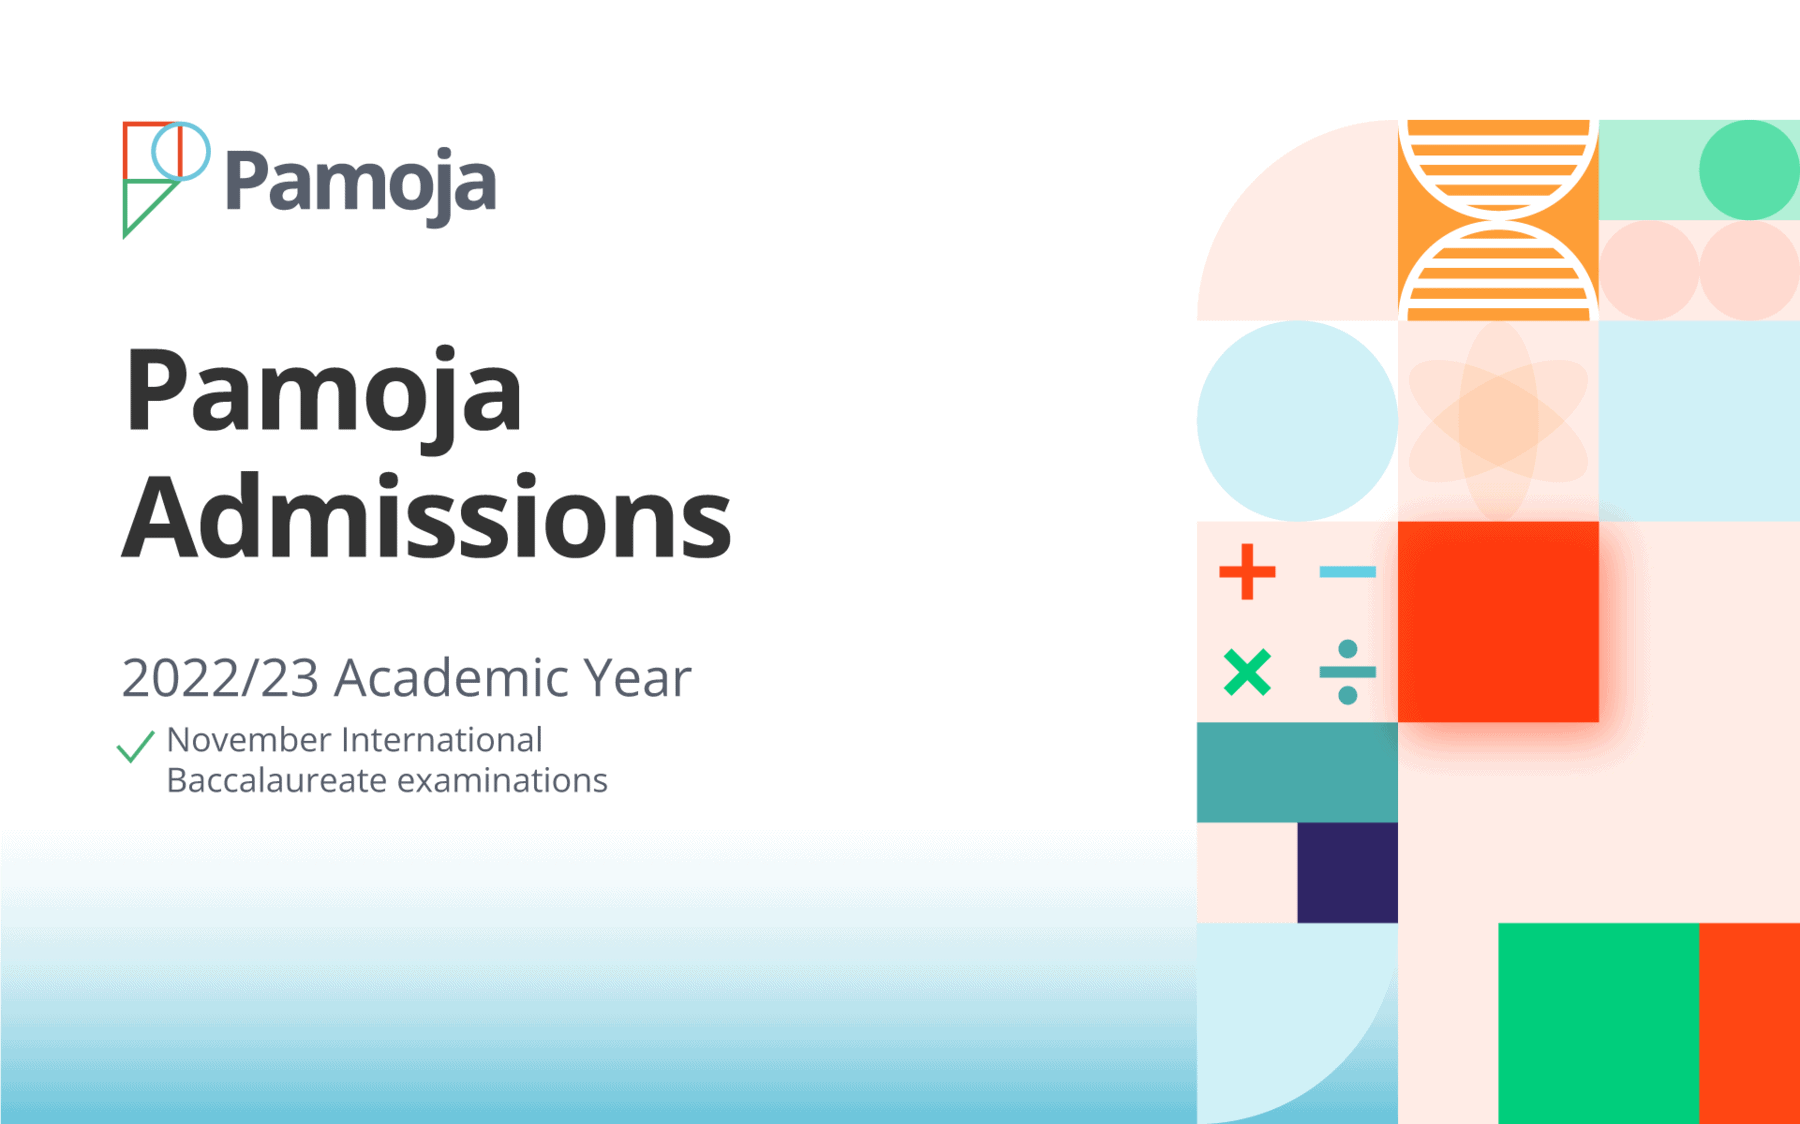 Pamoja Admissions Timeline and Fees - Feb 2022 Academic Year (November examinations)